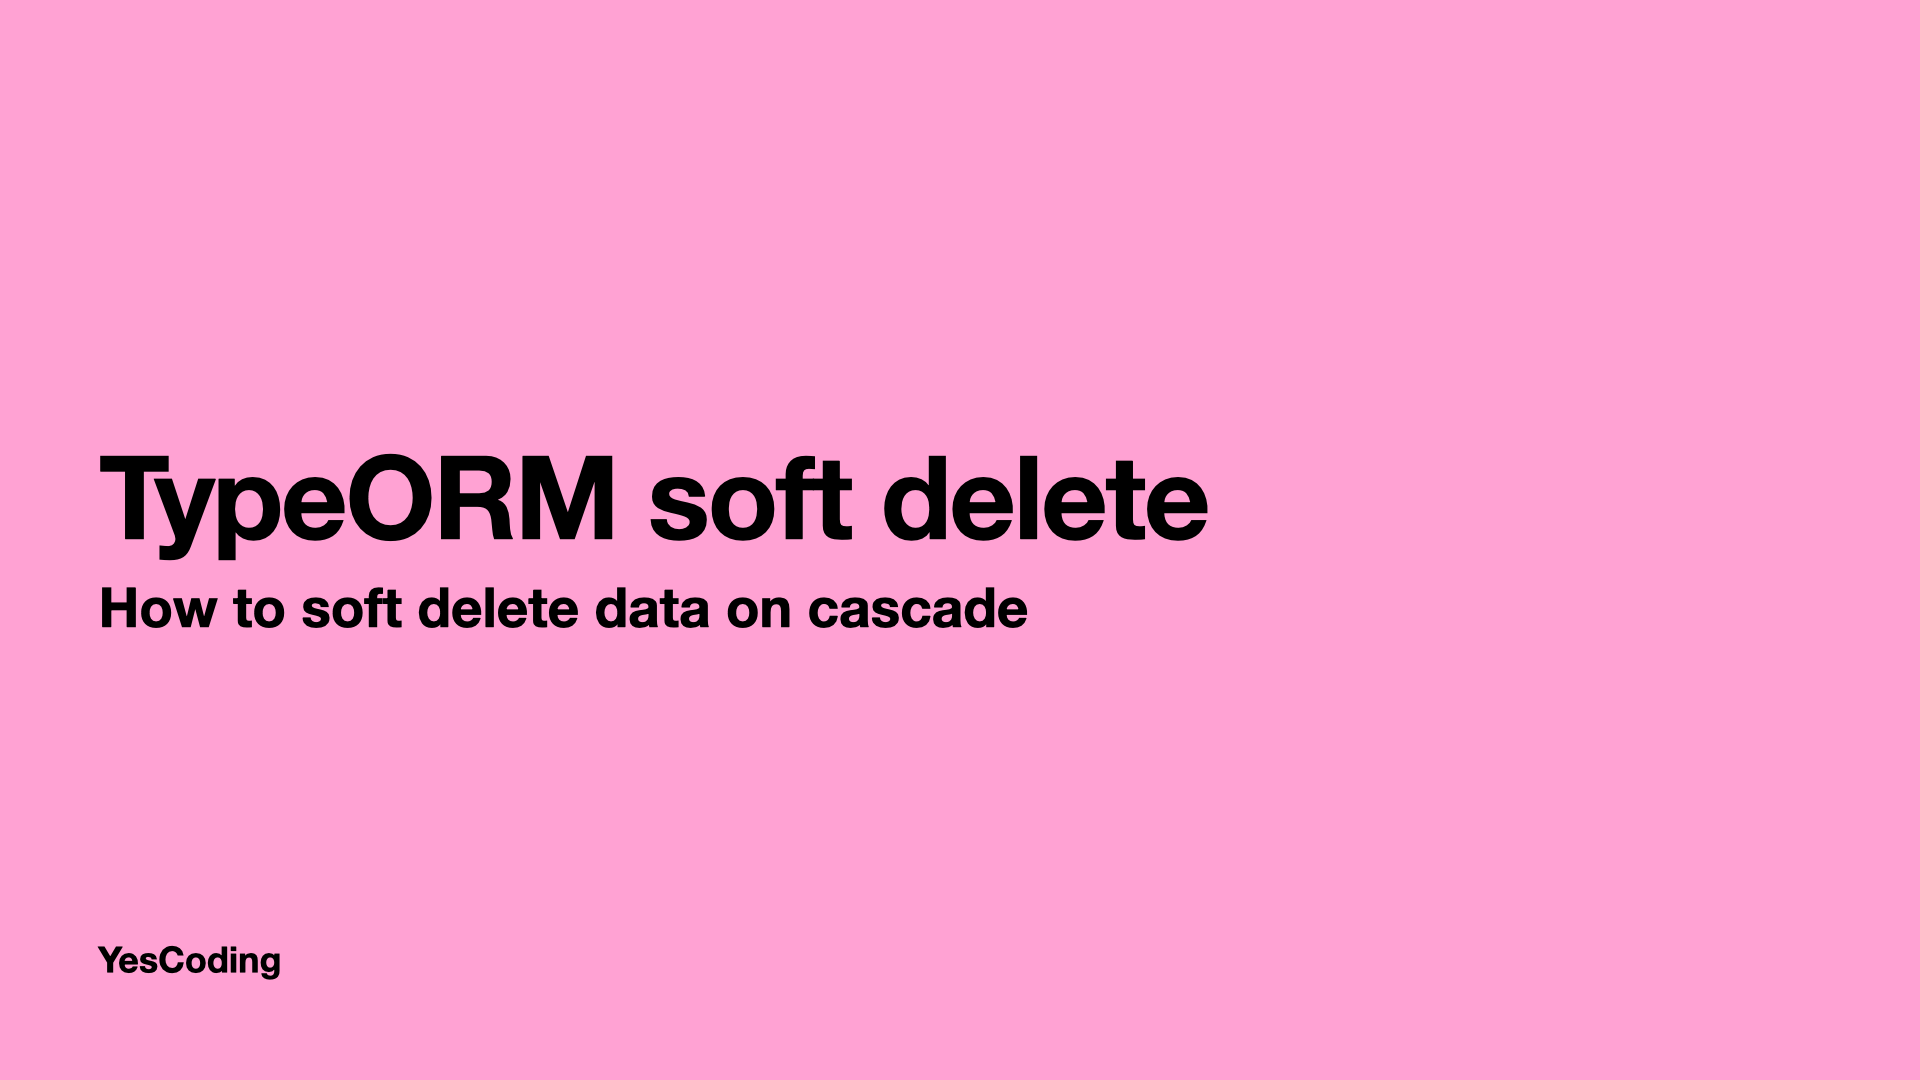 TypeORM soft delete on cascade